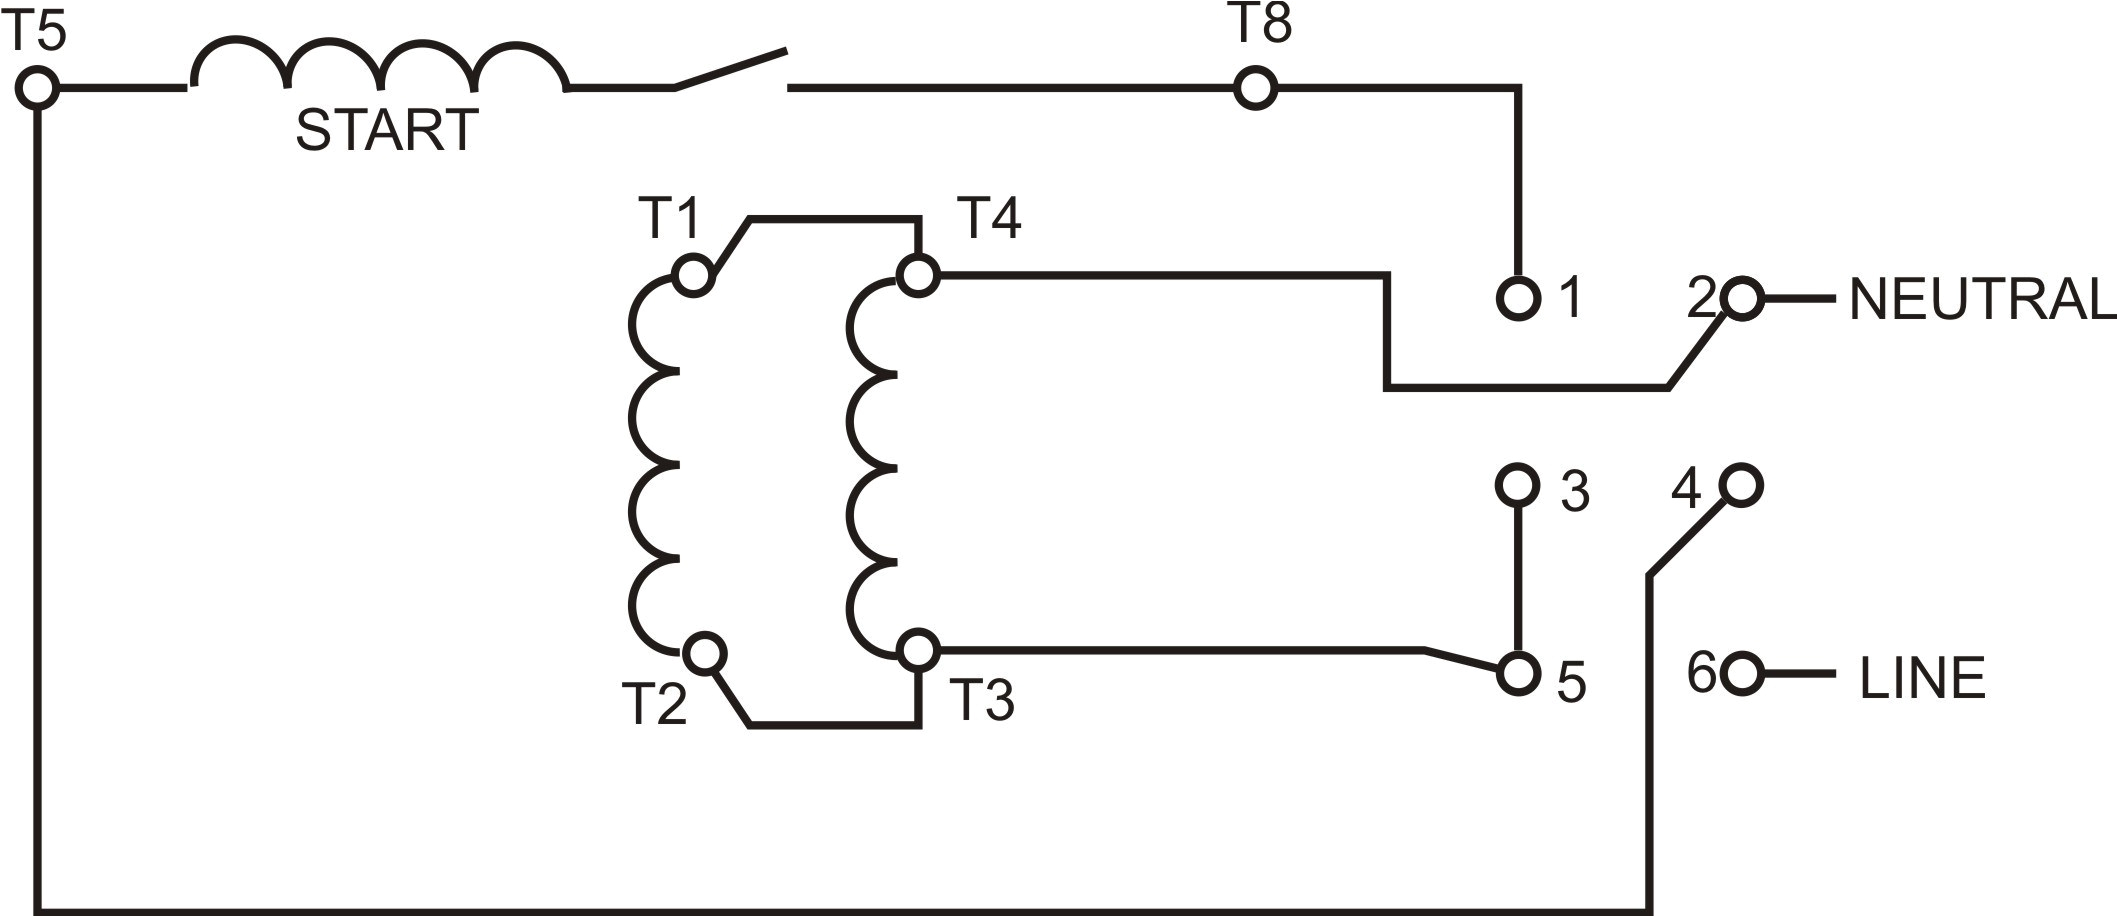 electric motor wiring diagram 110 to 220